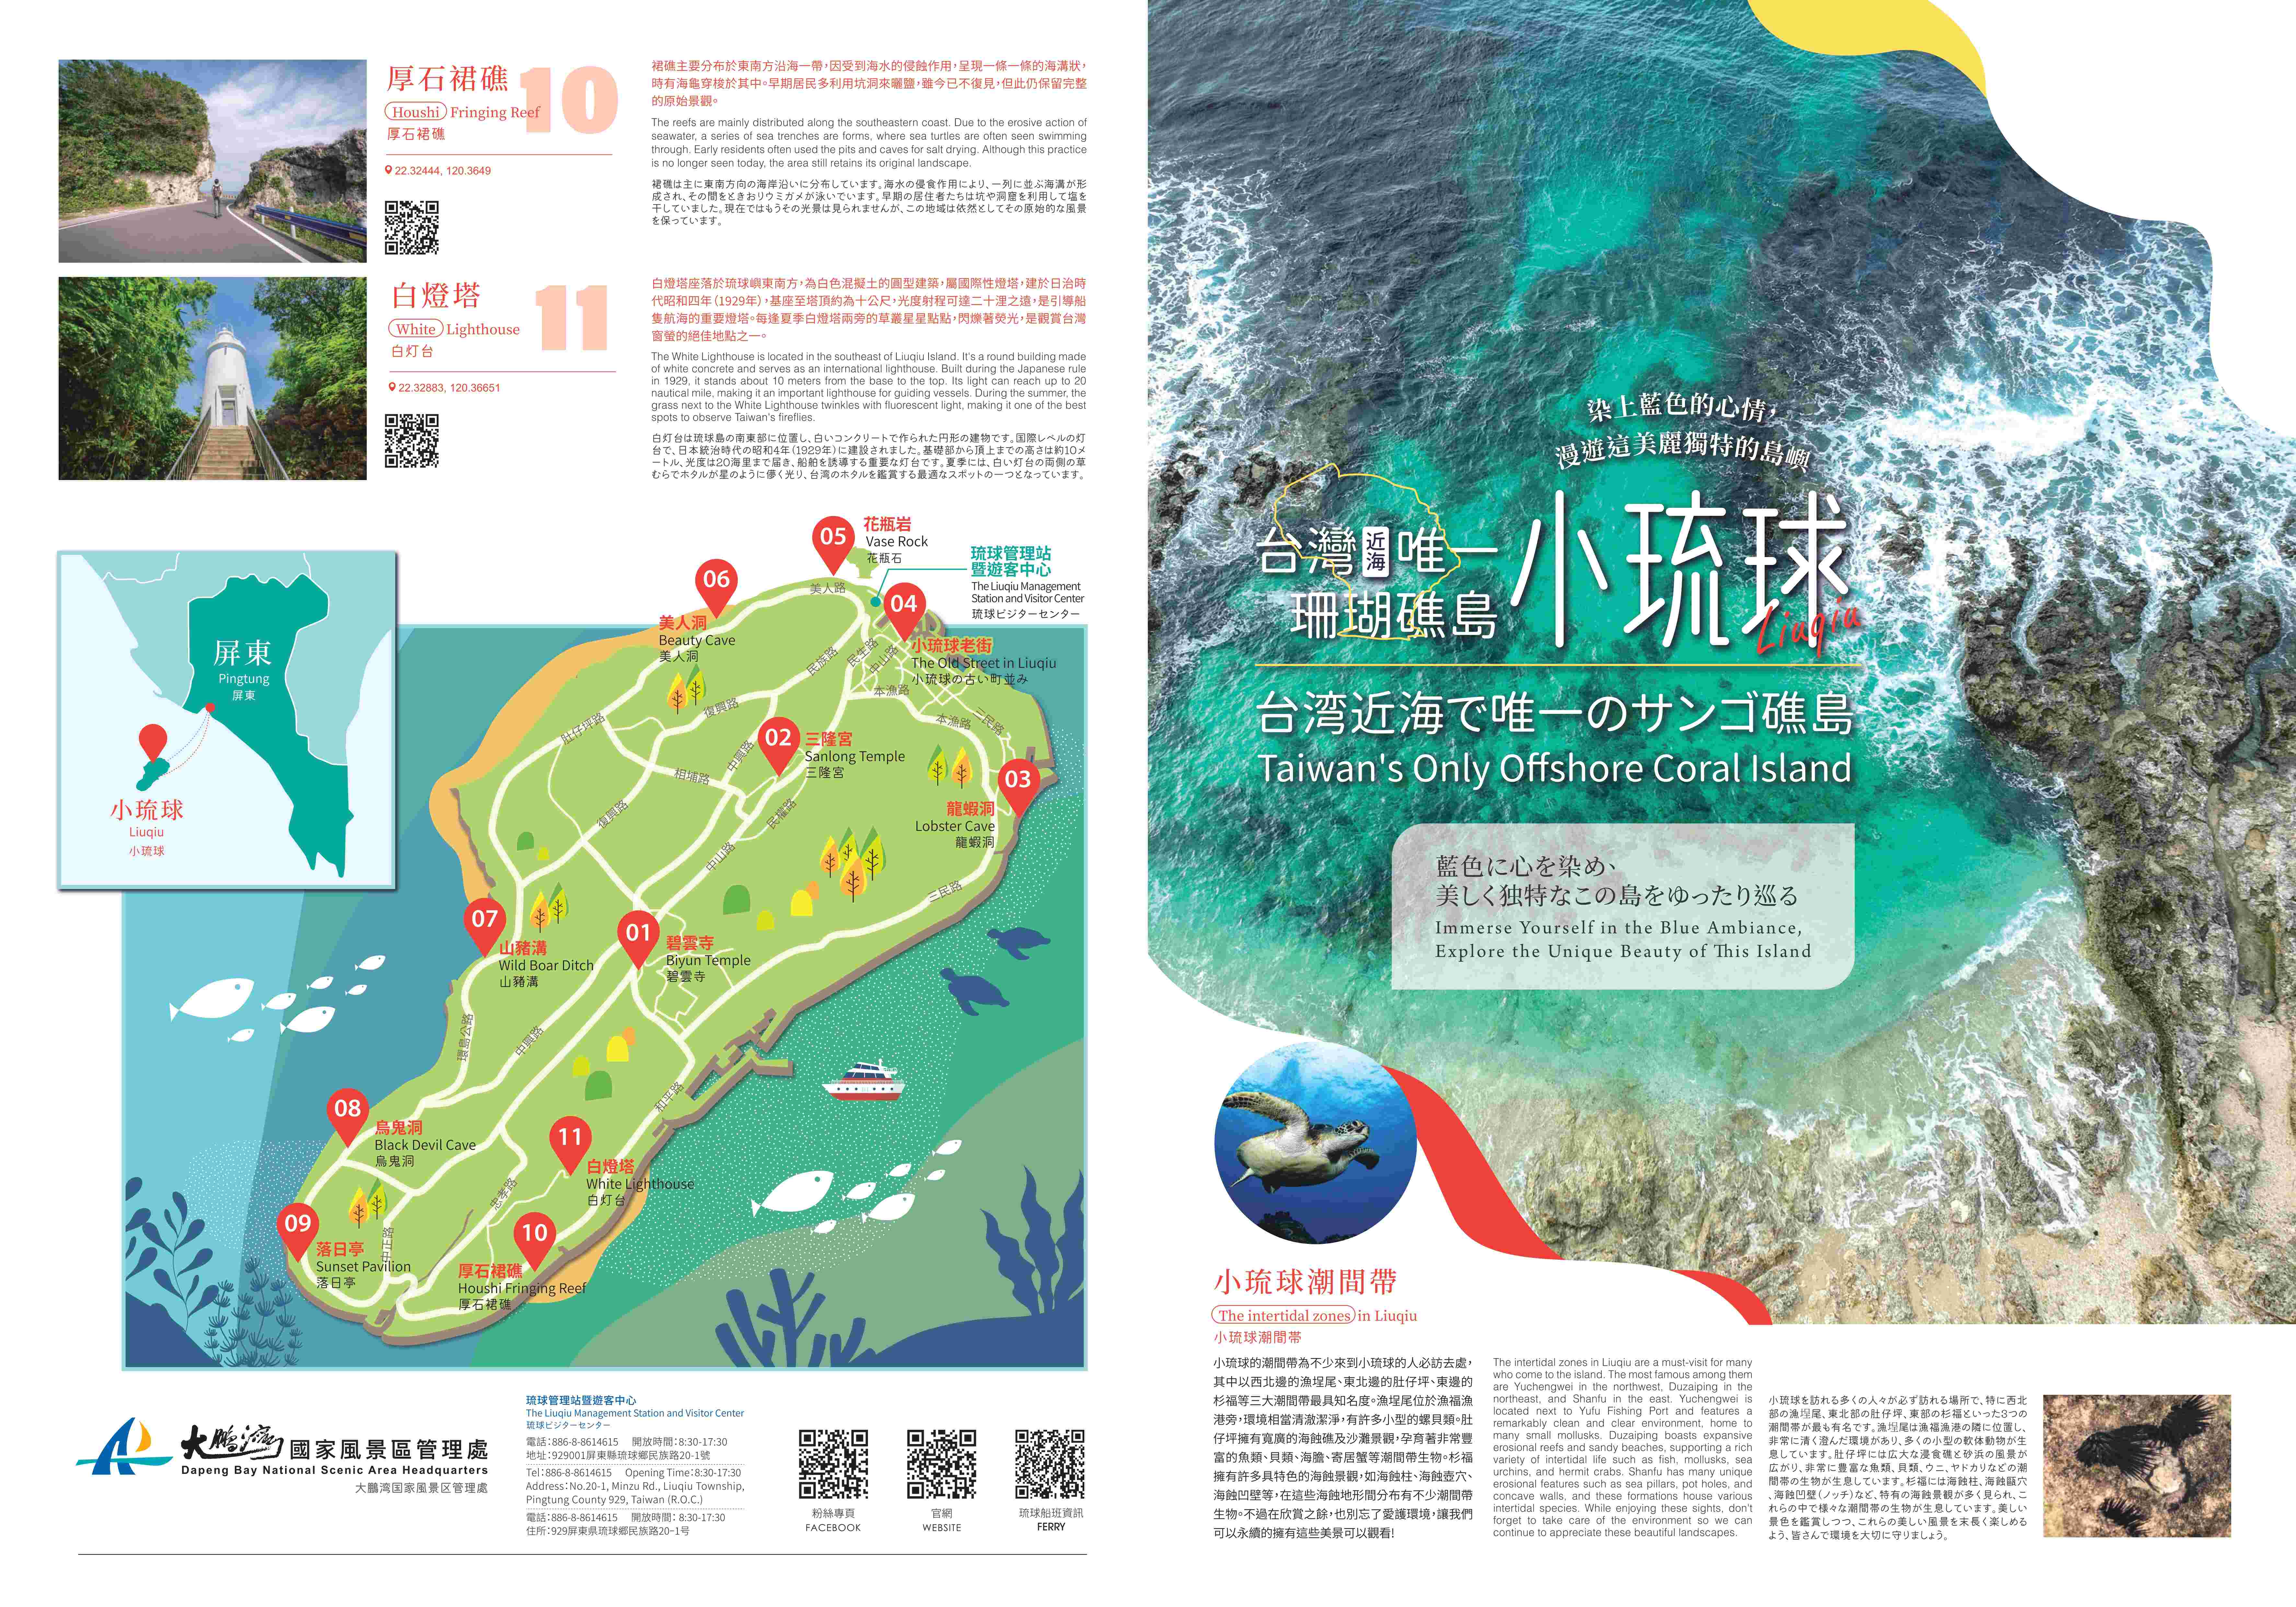 Liuqiu sightseeing guide brochure